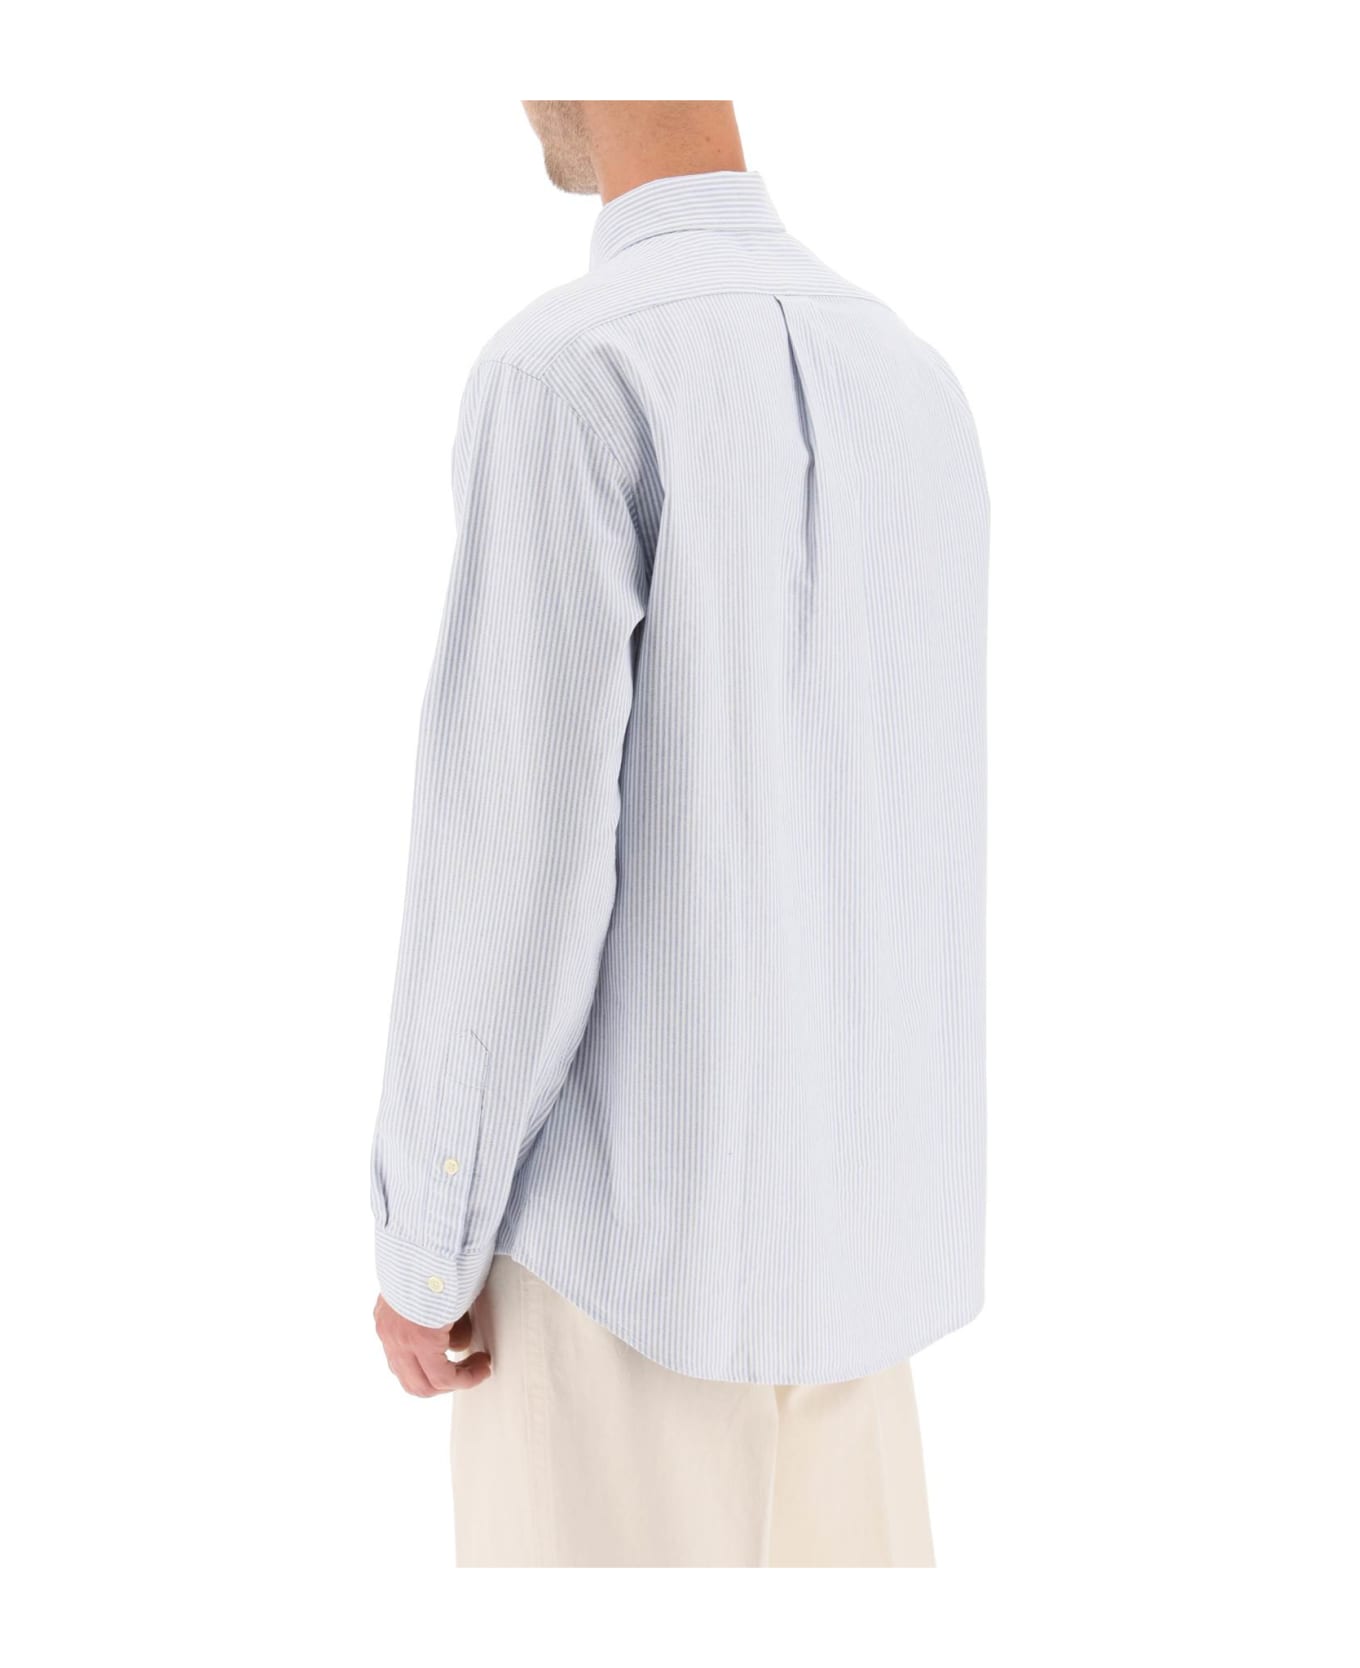 Polo Ralph Lauren Oxford Shirt In Striped Cotton - BLUE WHITE STRIPE (White)